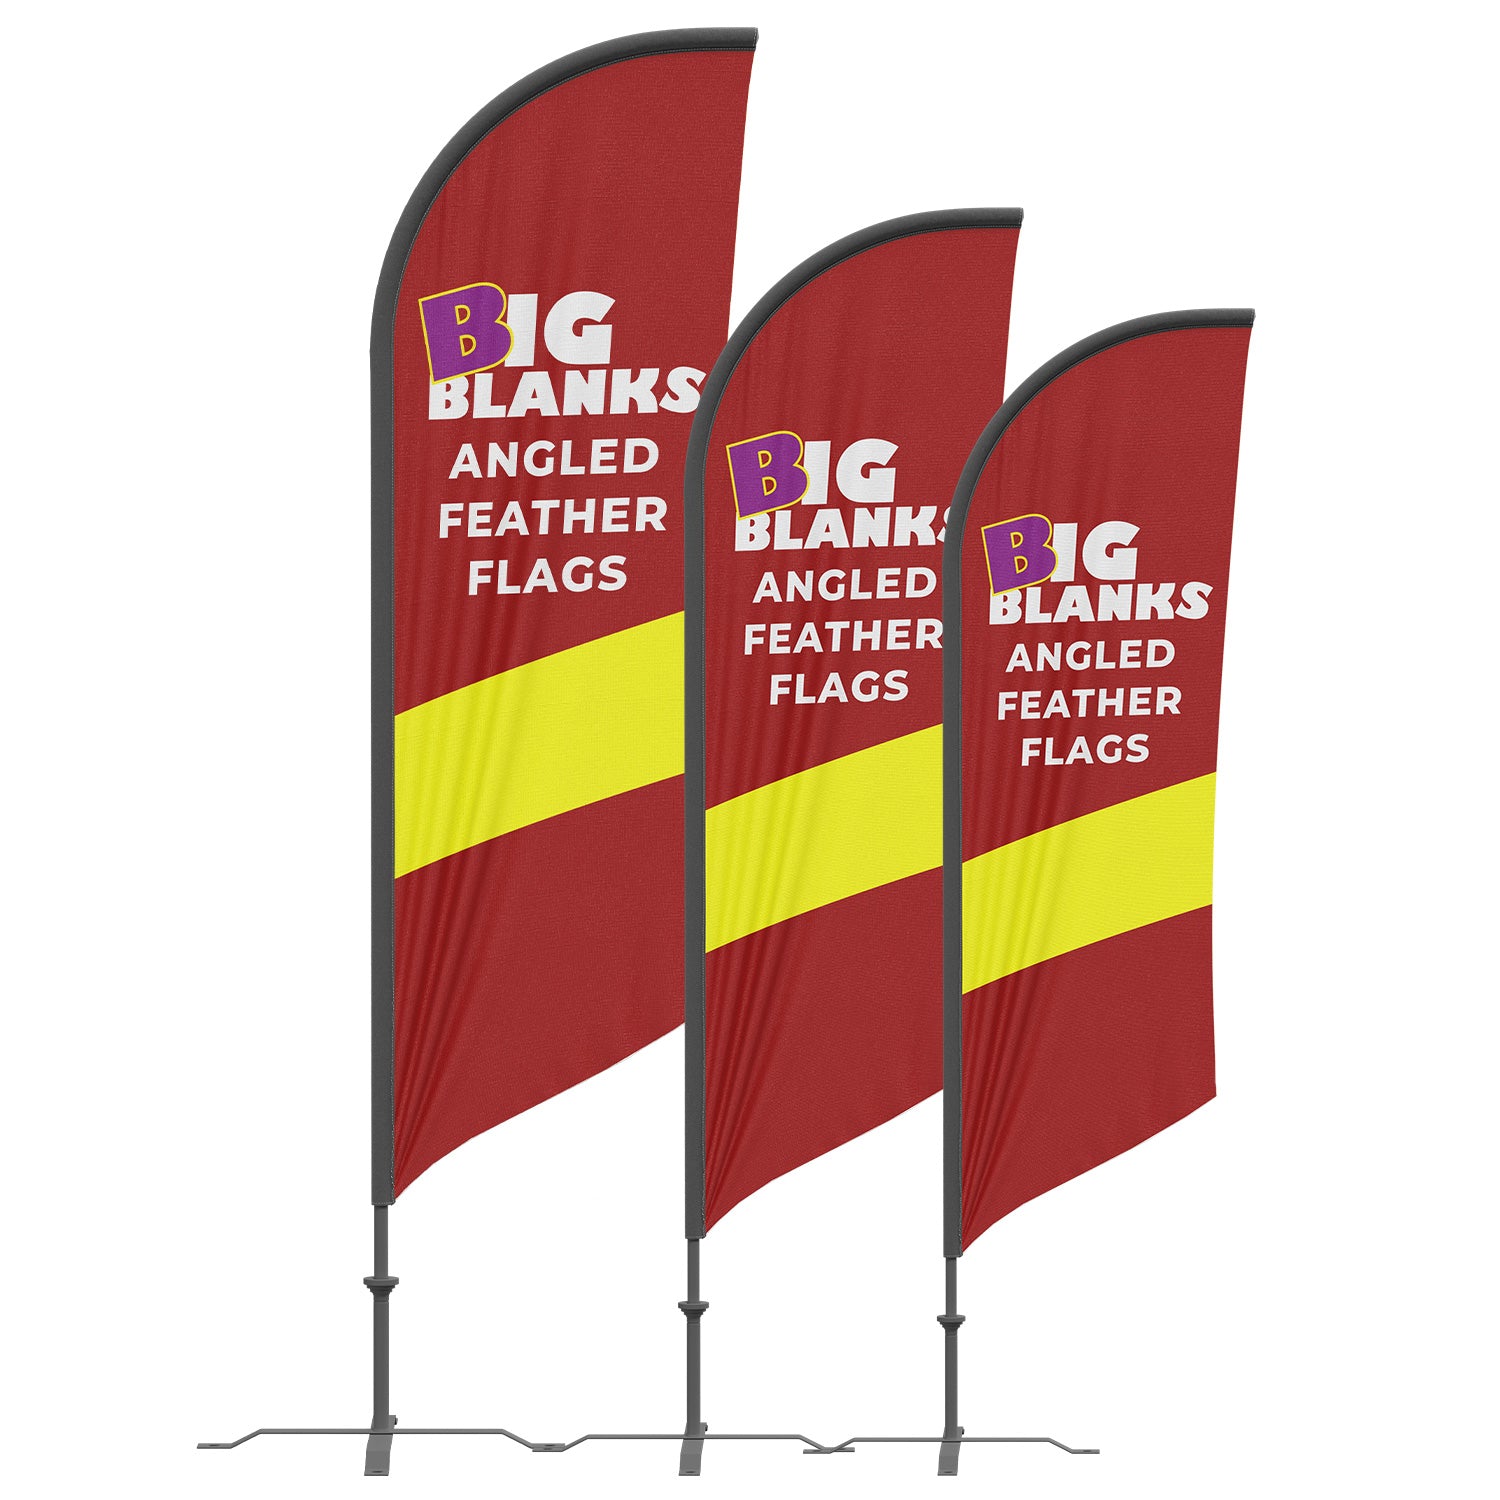 BigBlanks Custom Feather Flags - Angled